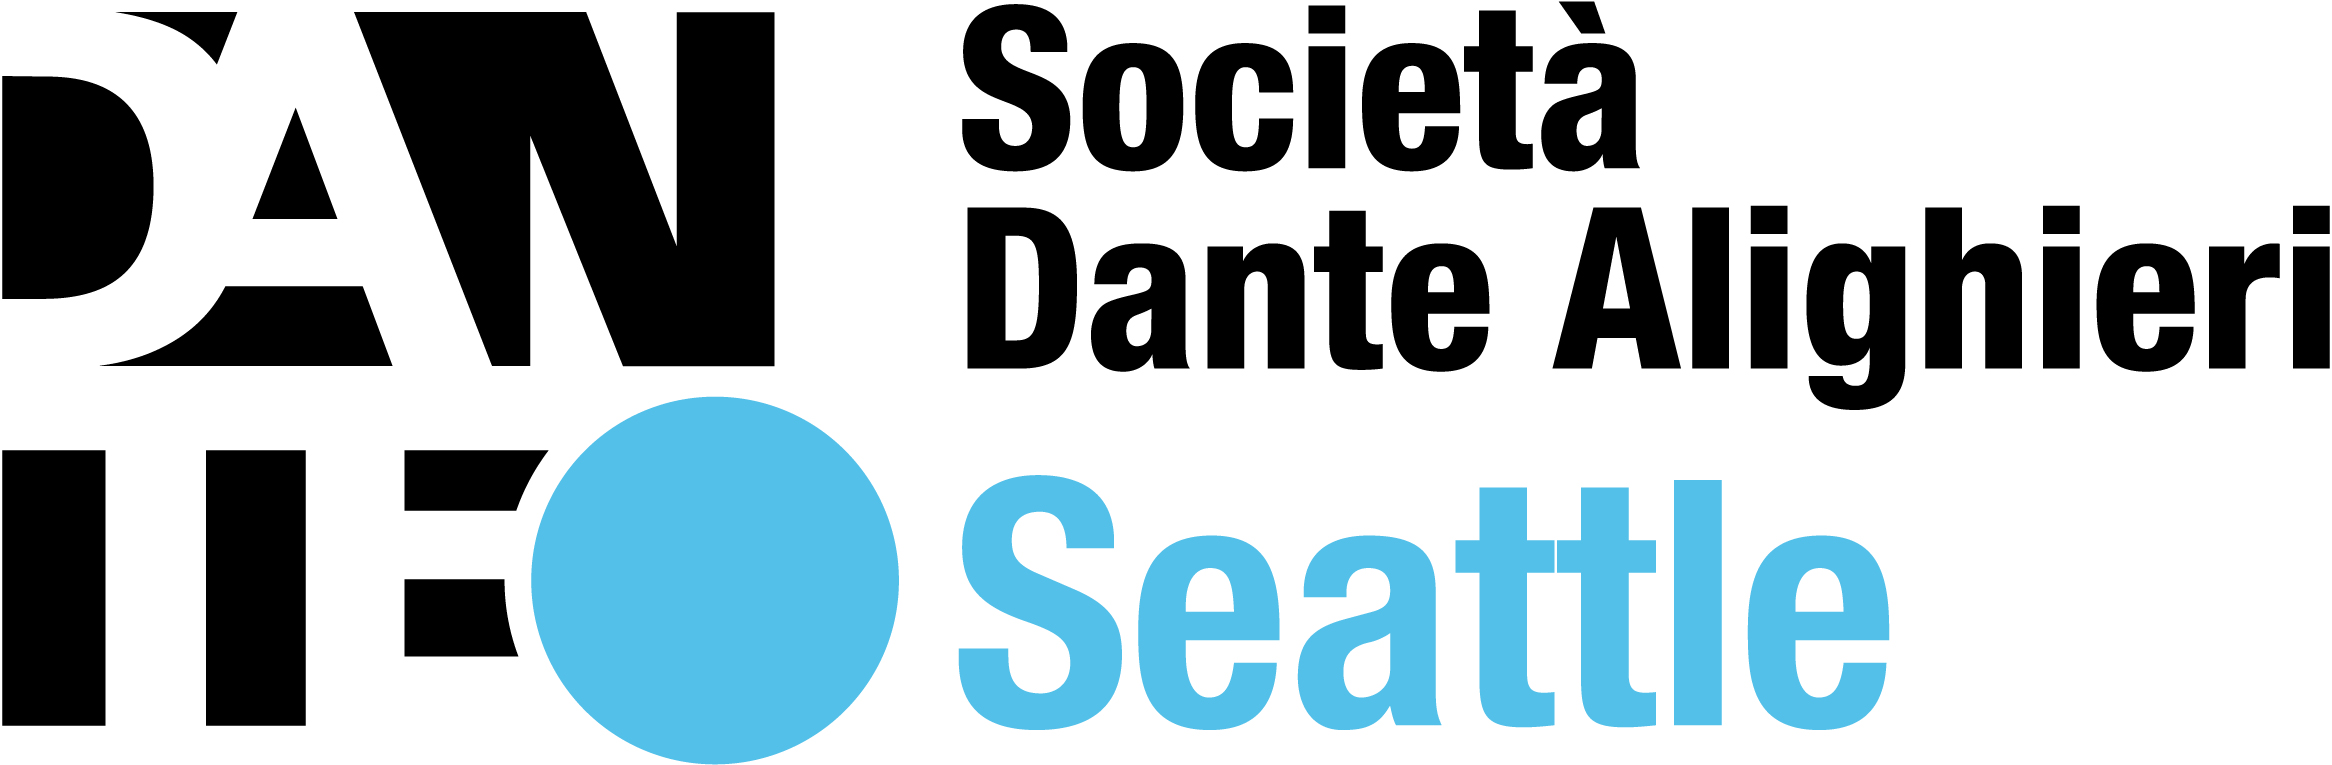 Dante Alighieri Society of Washington